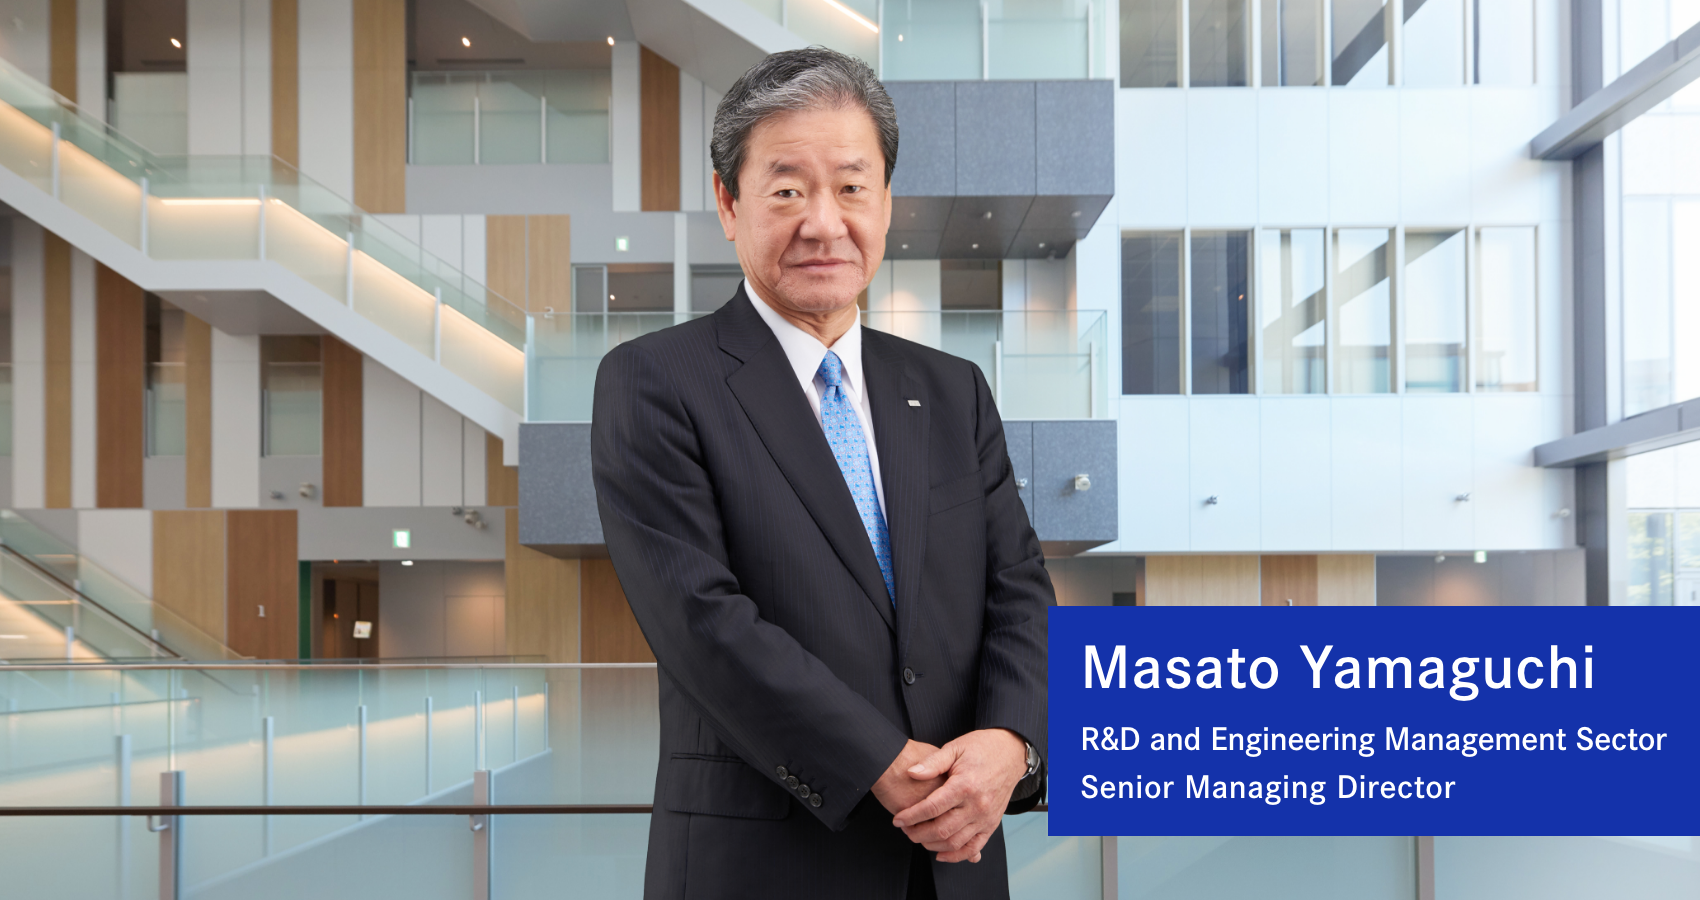 Masato Yamaguchi R&D and Engineering Management Sector Senior Managing Director